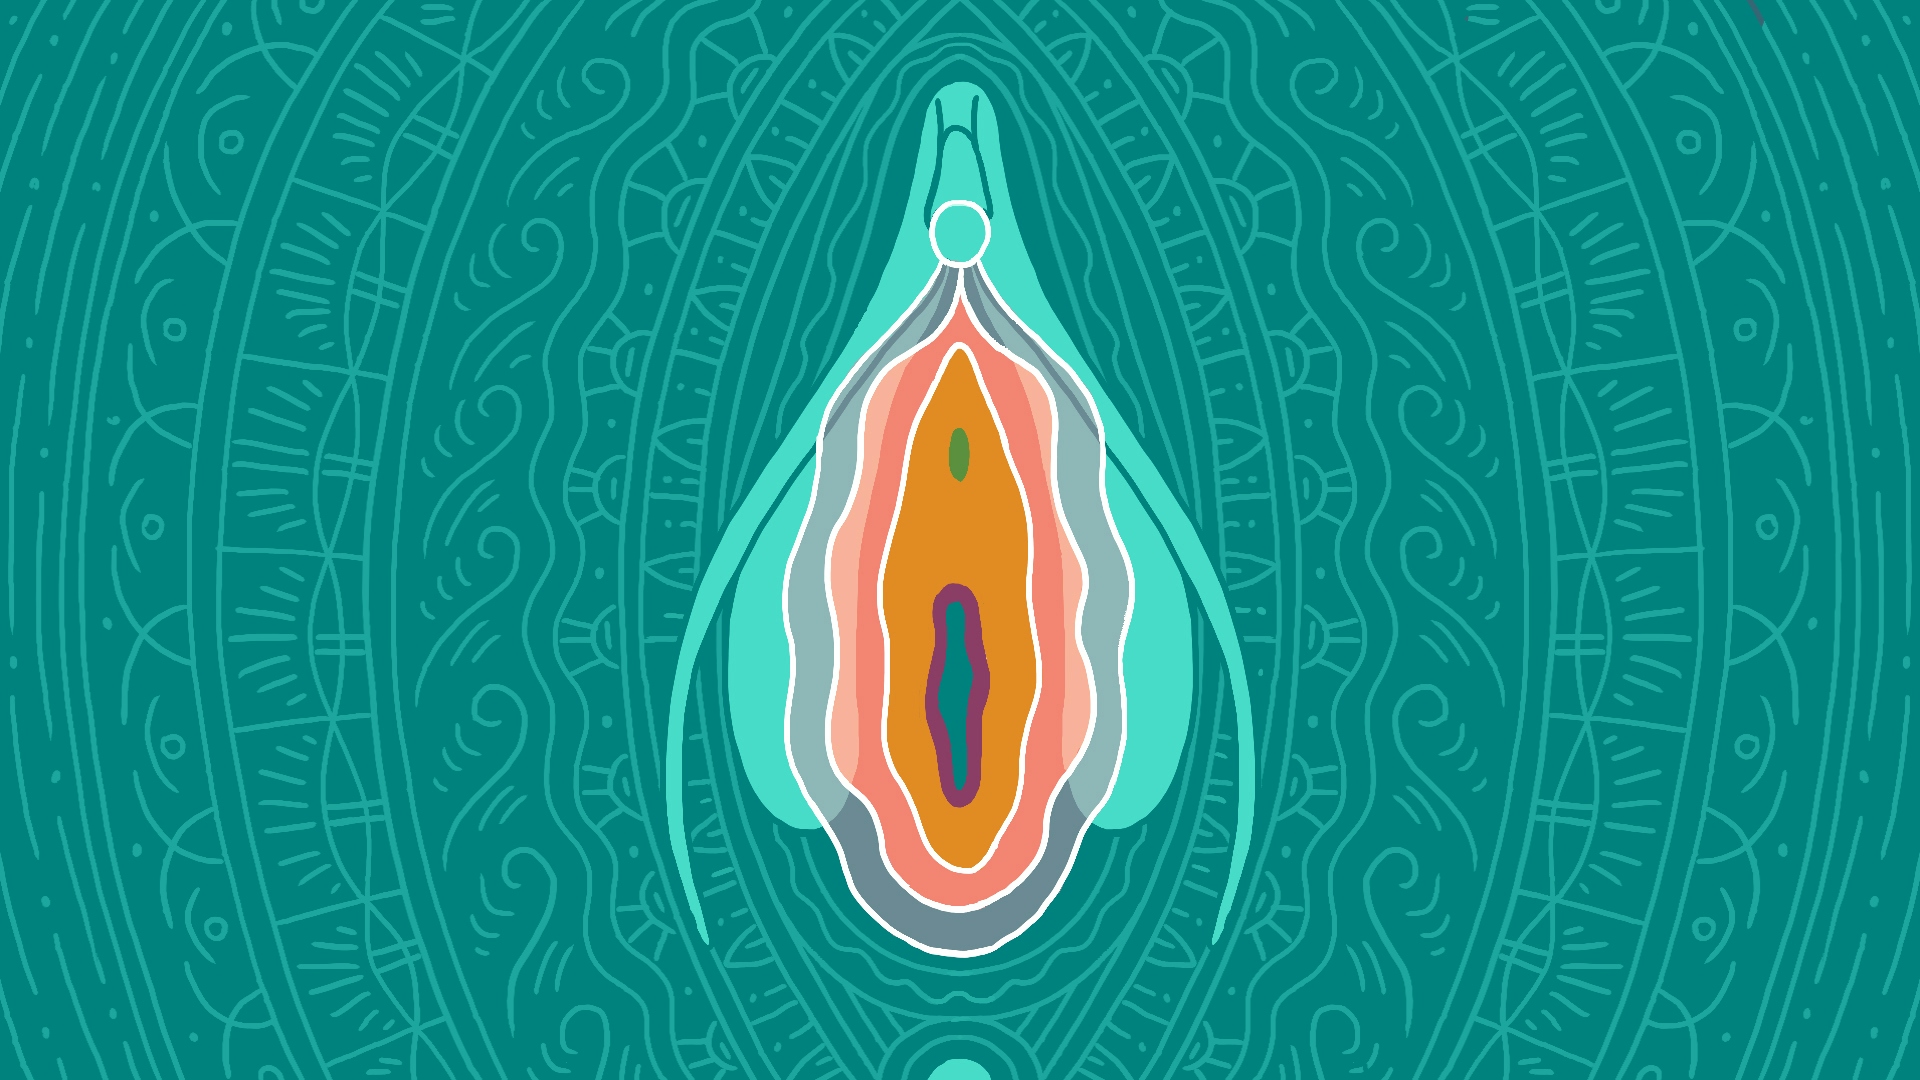 Illustration of the vulva, including the vagina, labia, and clitoris